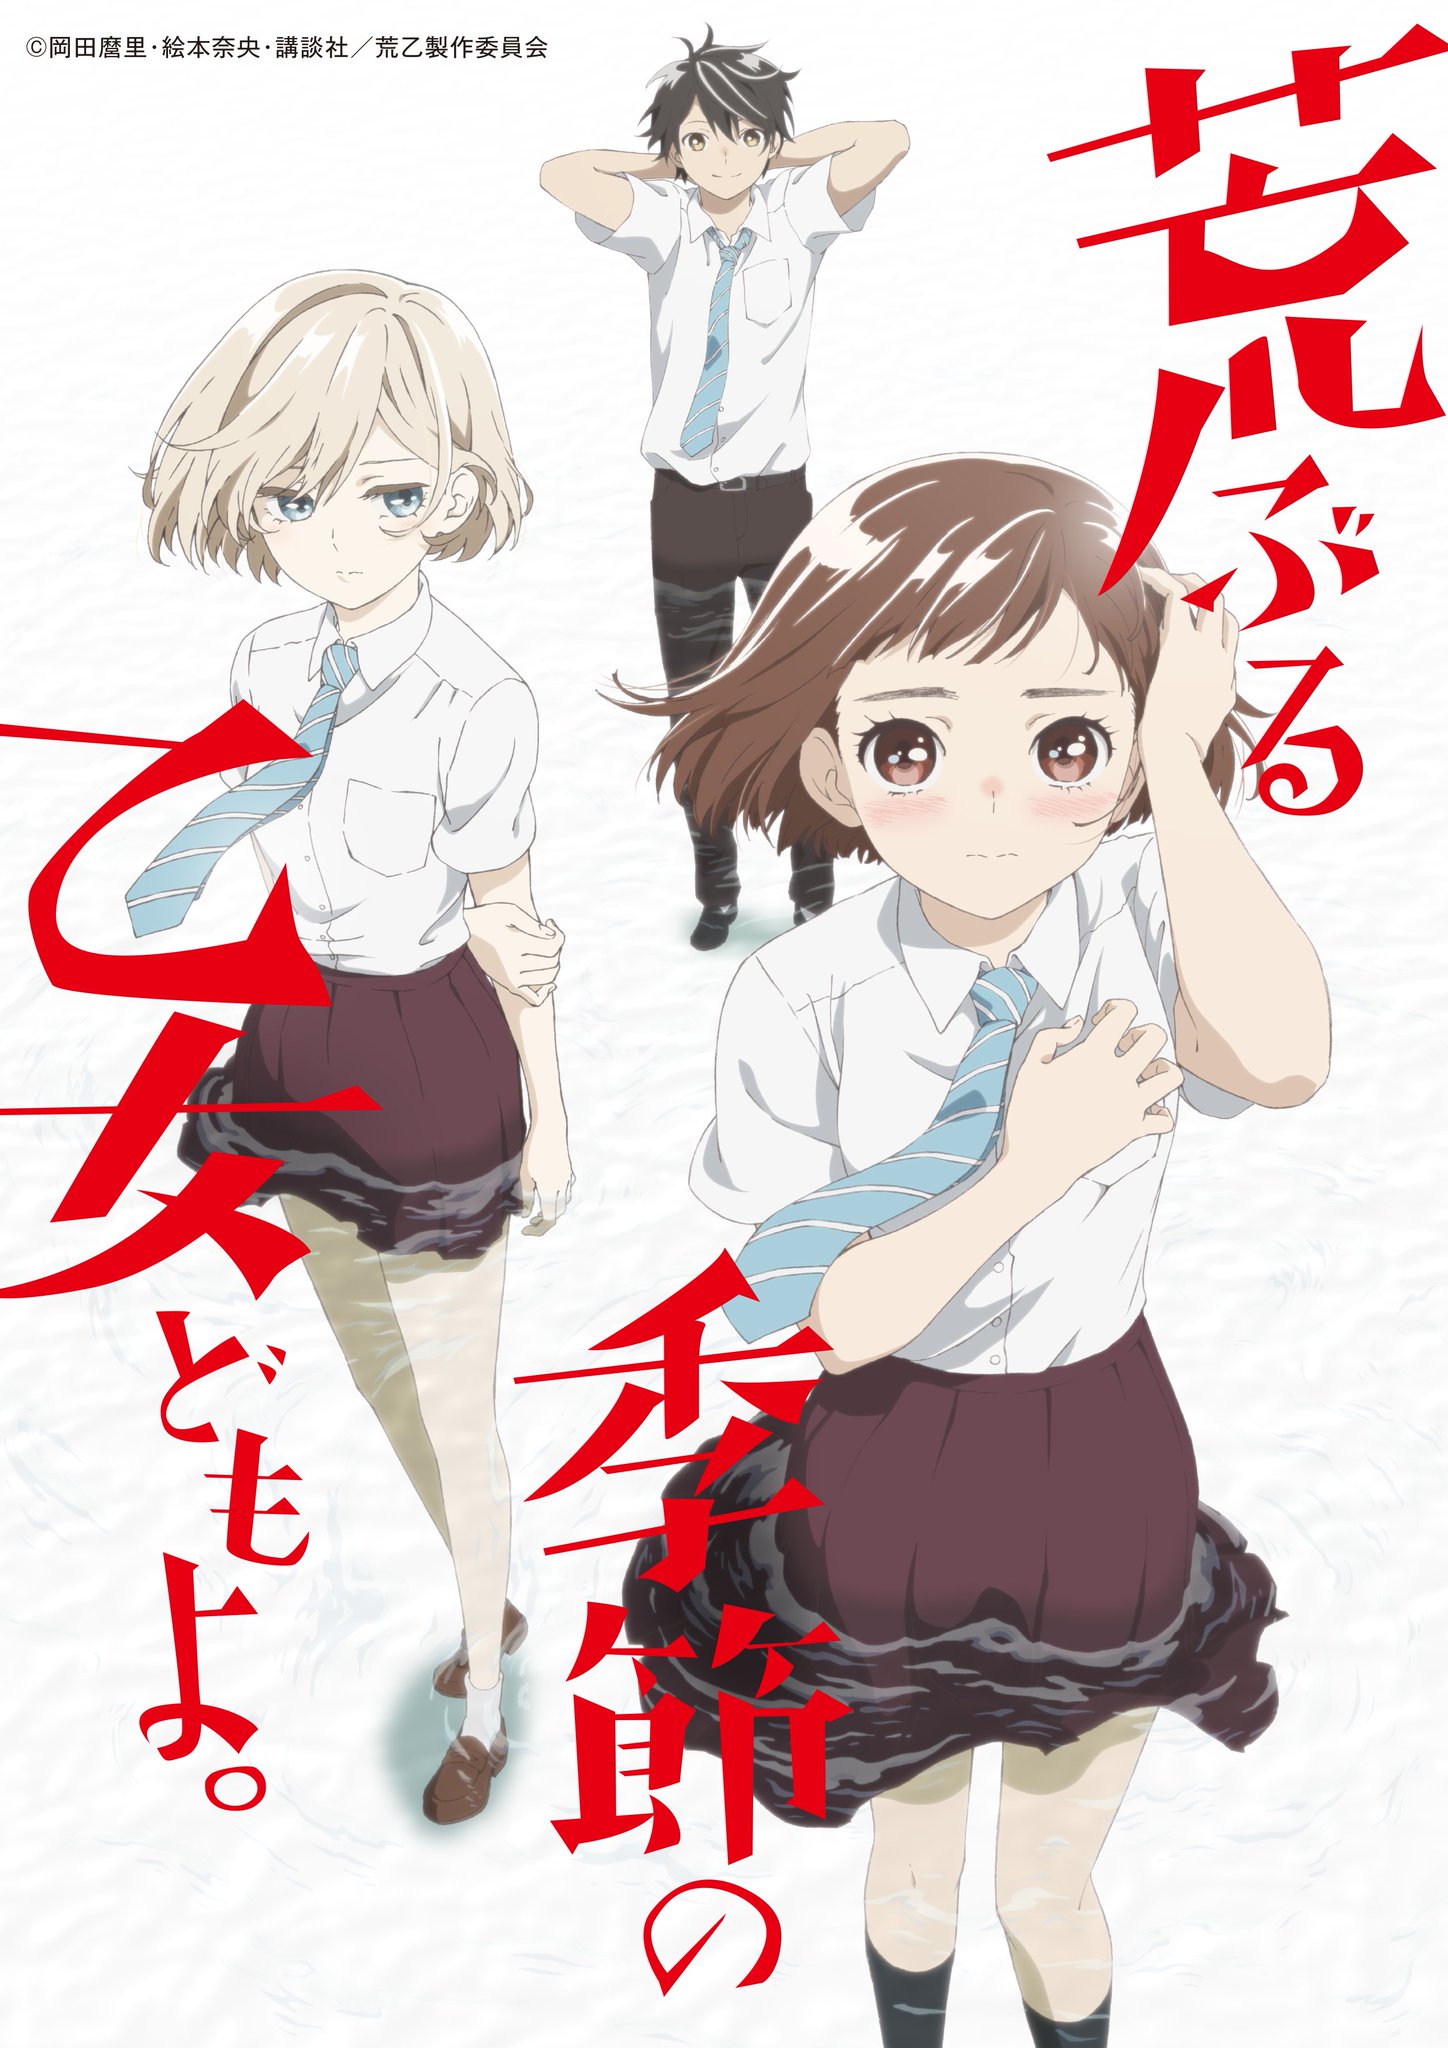 First Impressions (Updated)- Araburu Kisetsu no Otome-domo yo. - Lost in  Anime